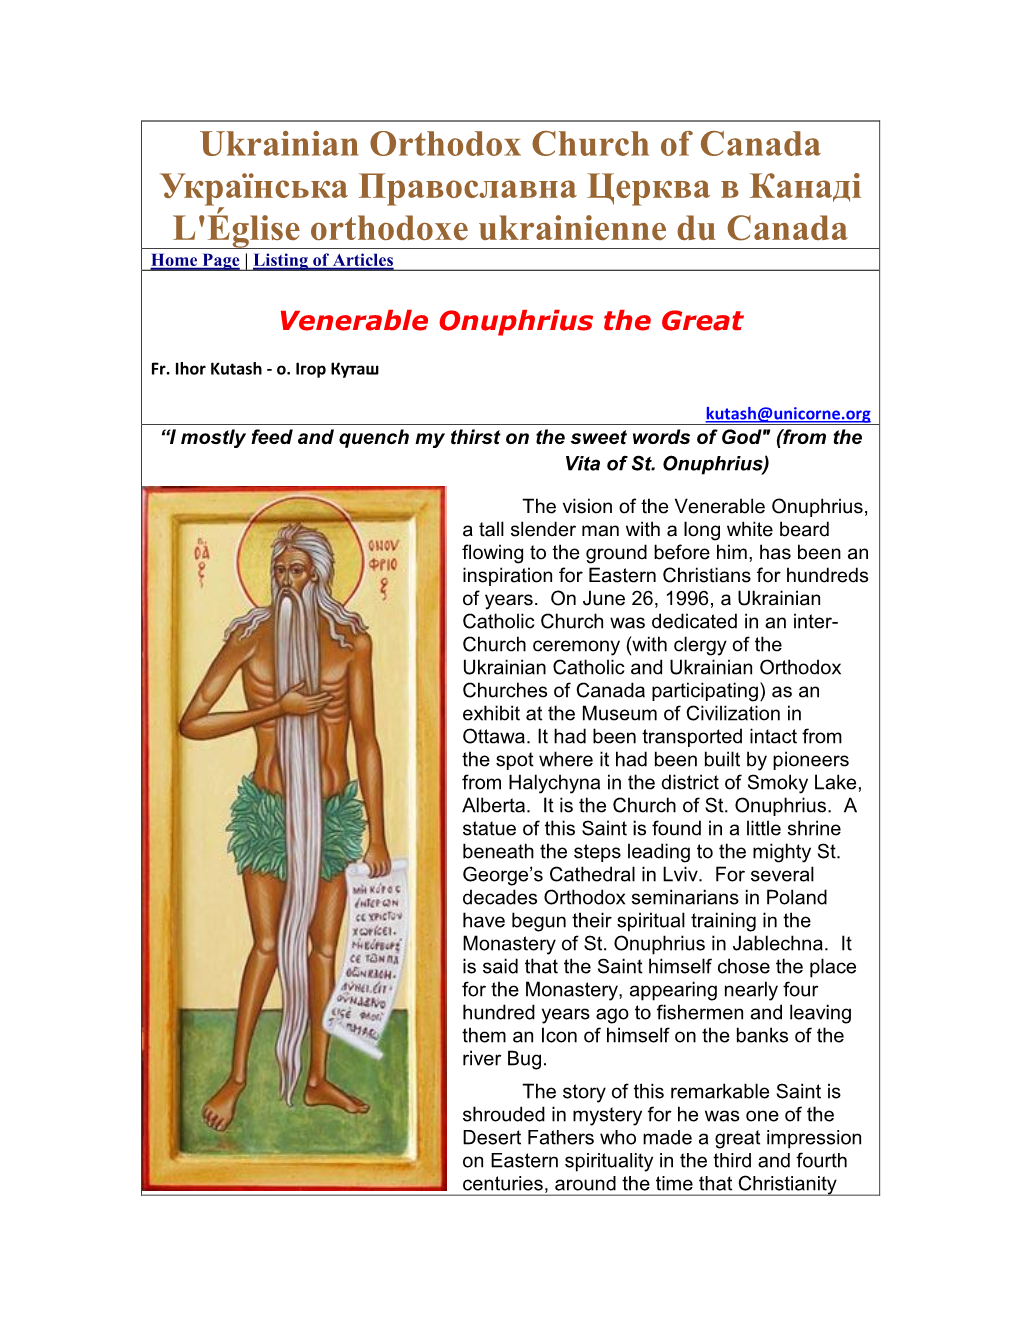 Venerable Onuphrius the Great